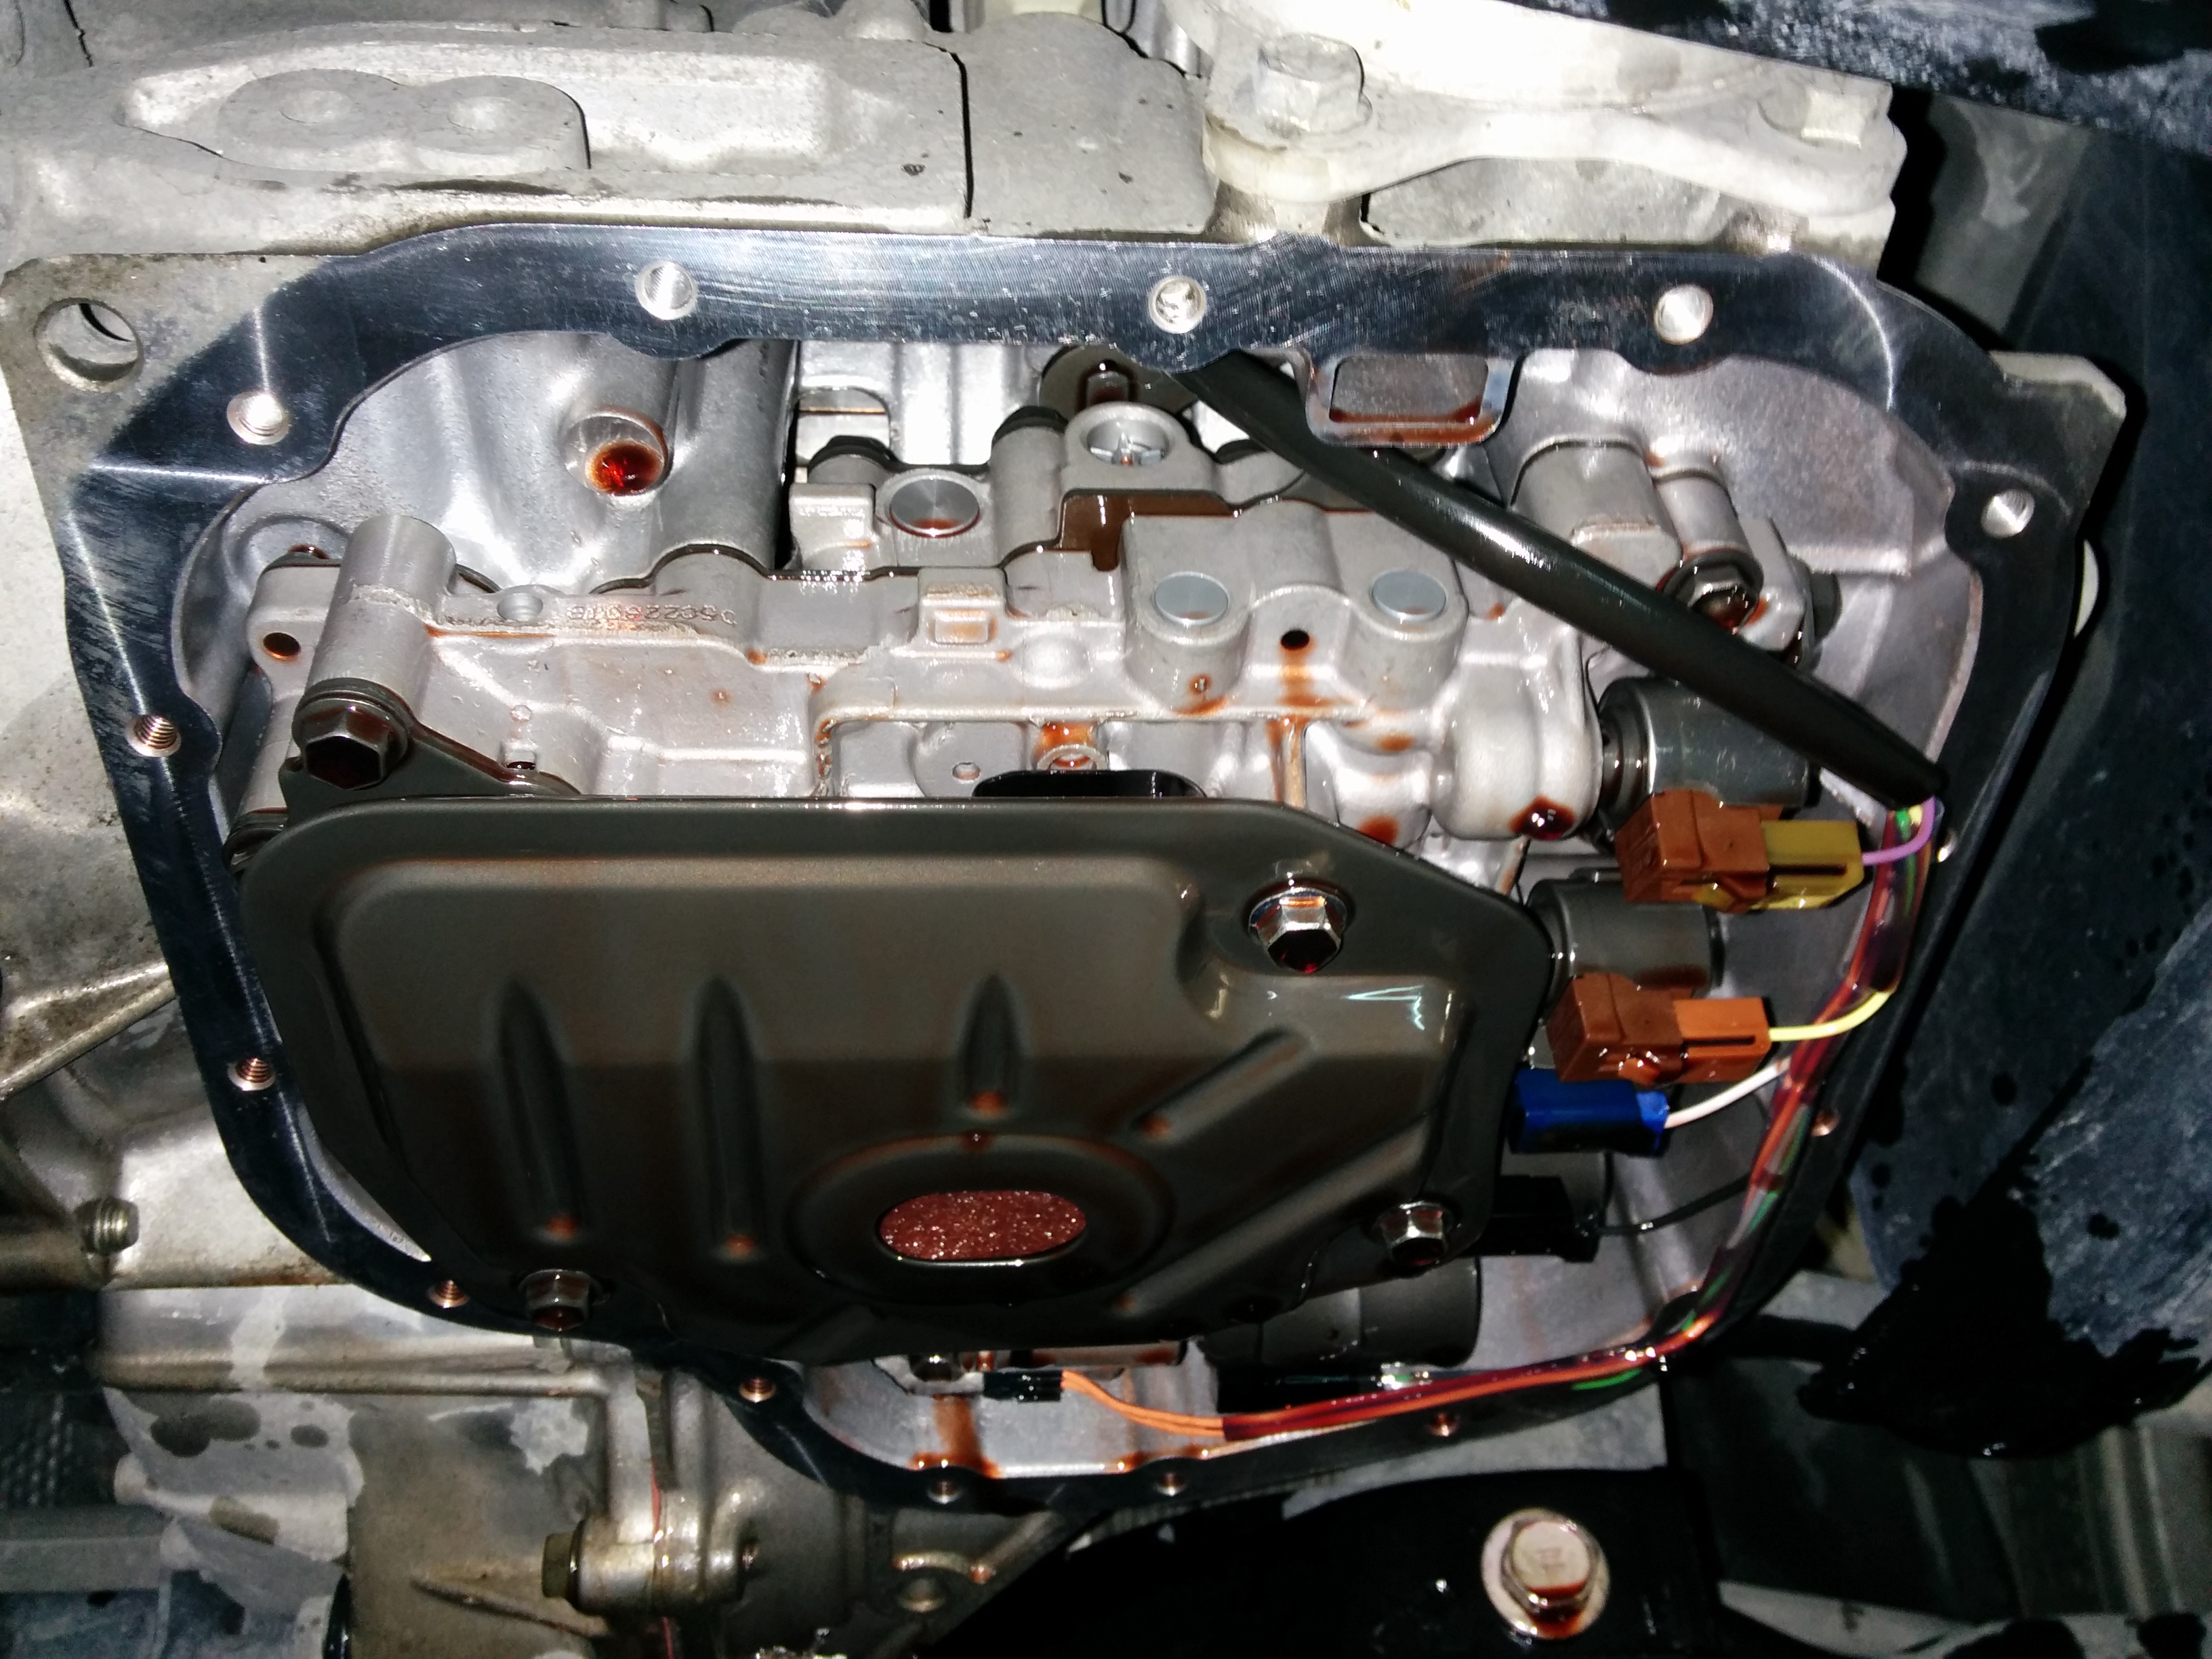 Тойота виш замена масла в вариаторе. Тойота Виш вариатор. K410 фильтр. Замена масла в вариаторе чери м11. Замена масла трансмиссионного Toyota Vitz (2009.